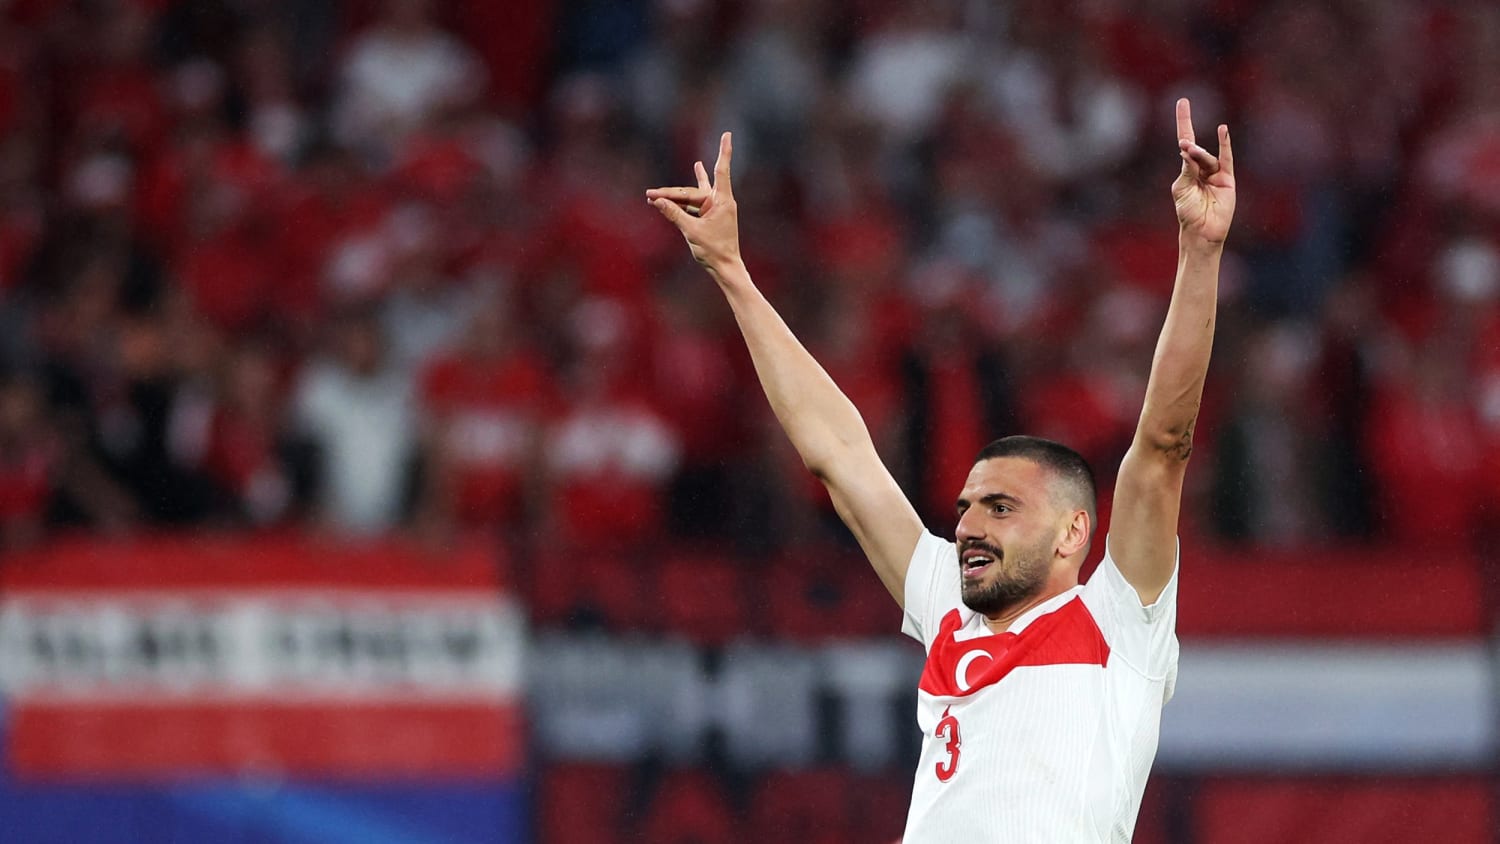 Germany summons Turkish ambassador over rightist ‘wolf’ goal celebration at soccer tournament